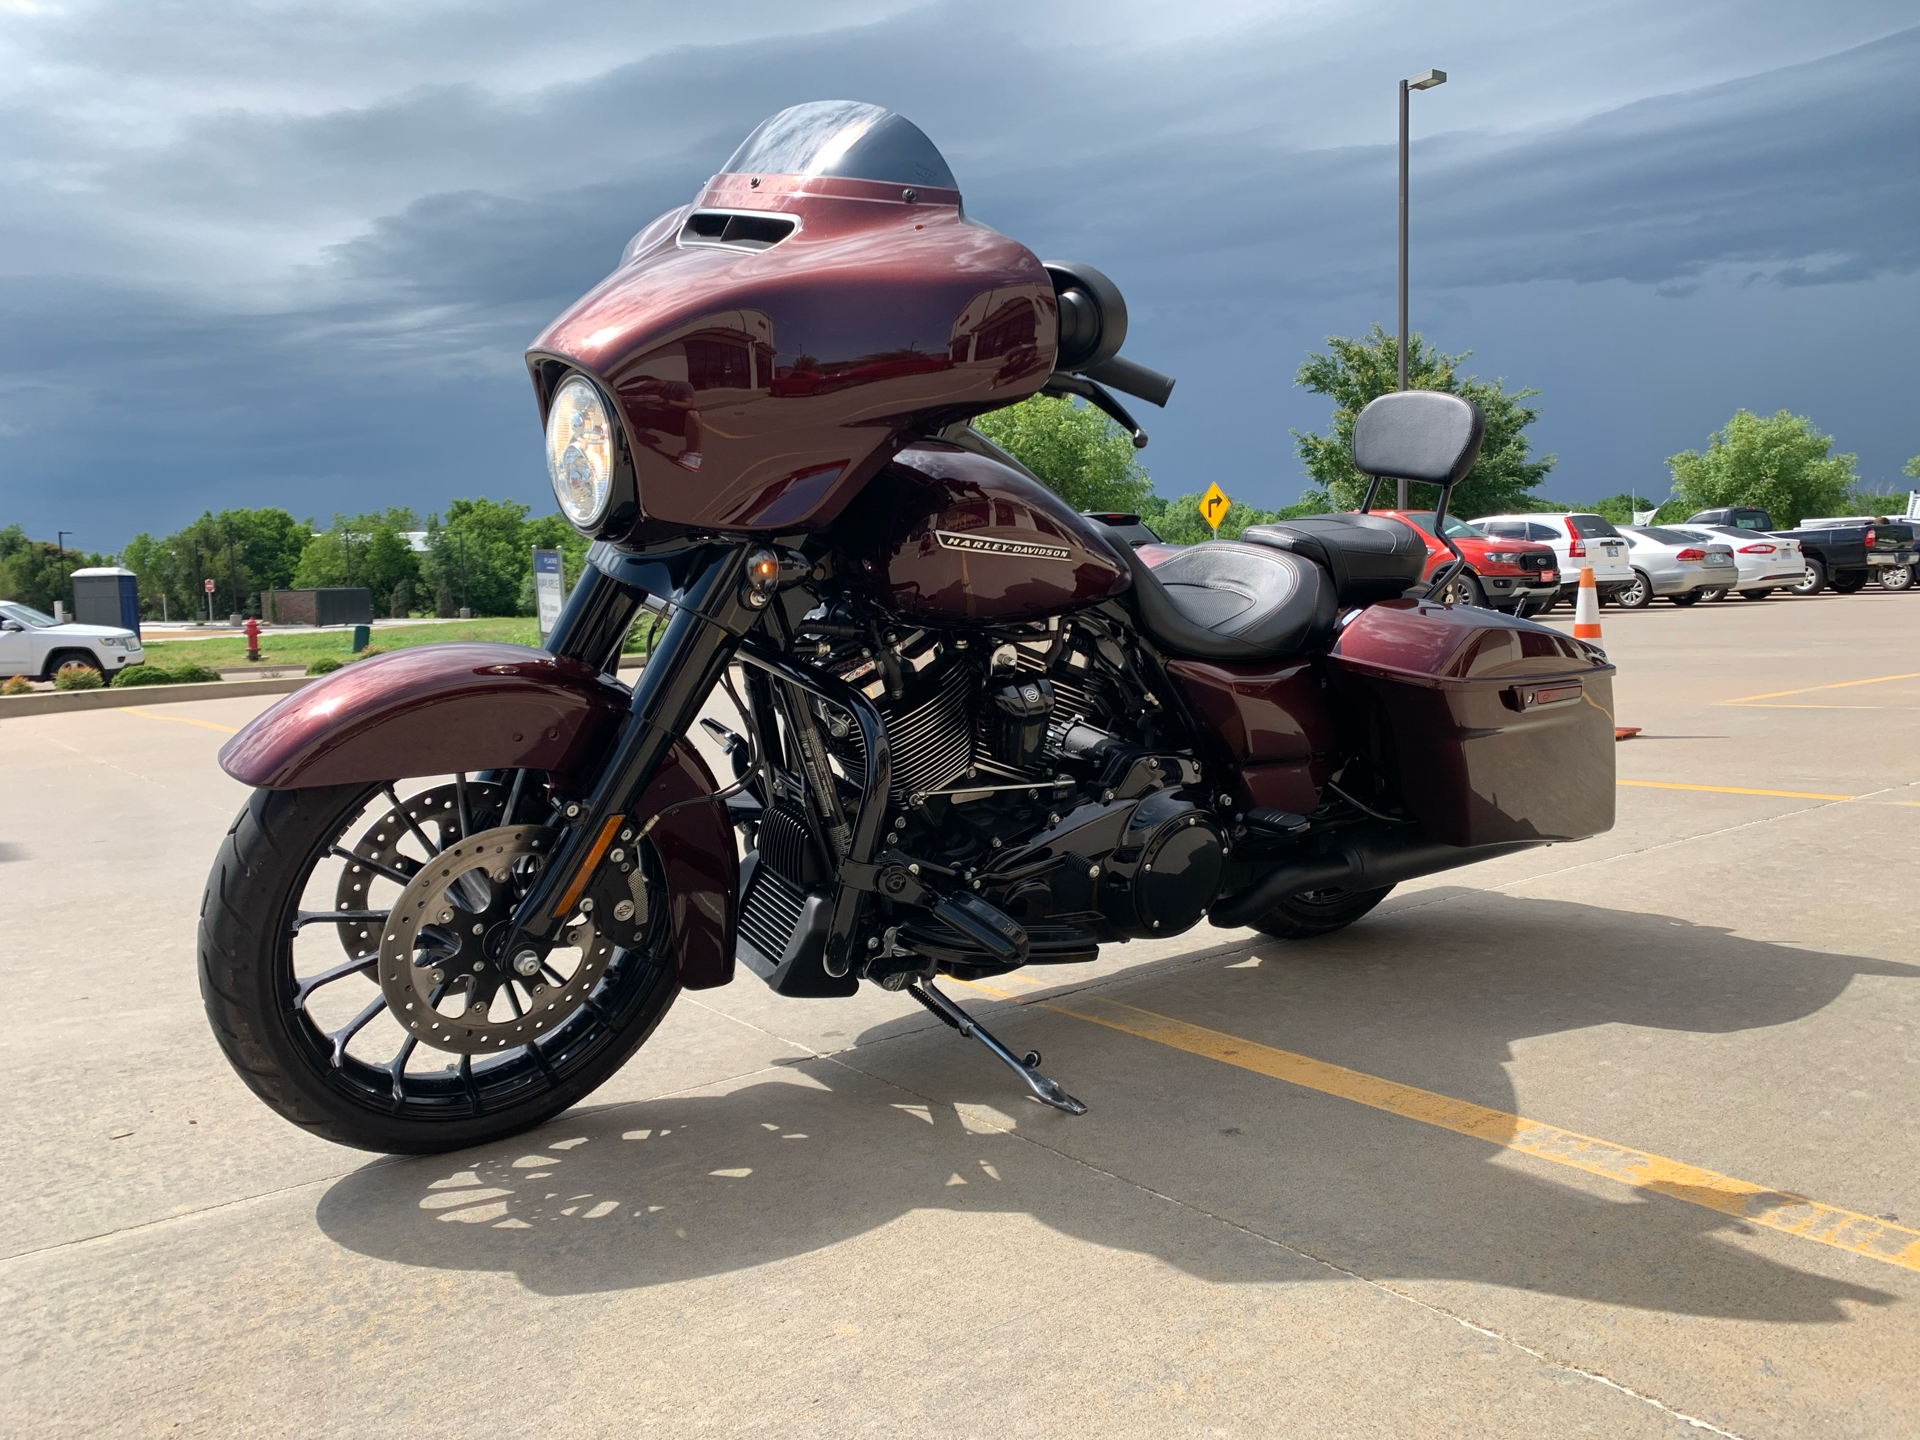 2018 Harley-Davidson Street Glide® Special in Norman, Oklahoma - Photo 4